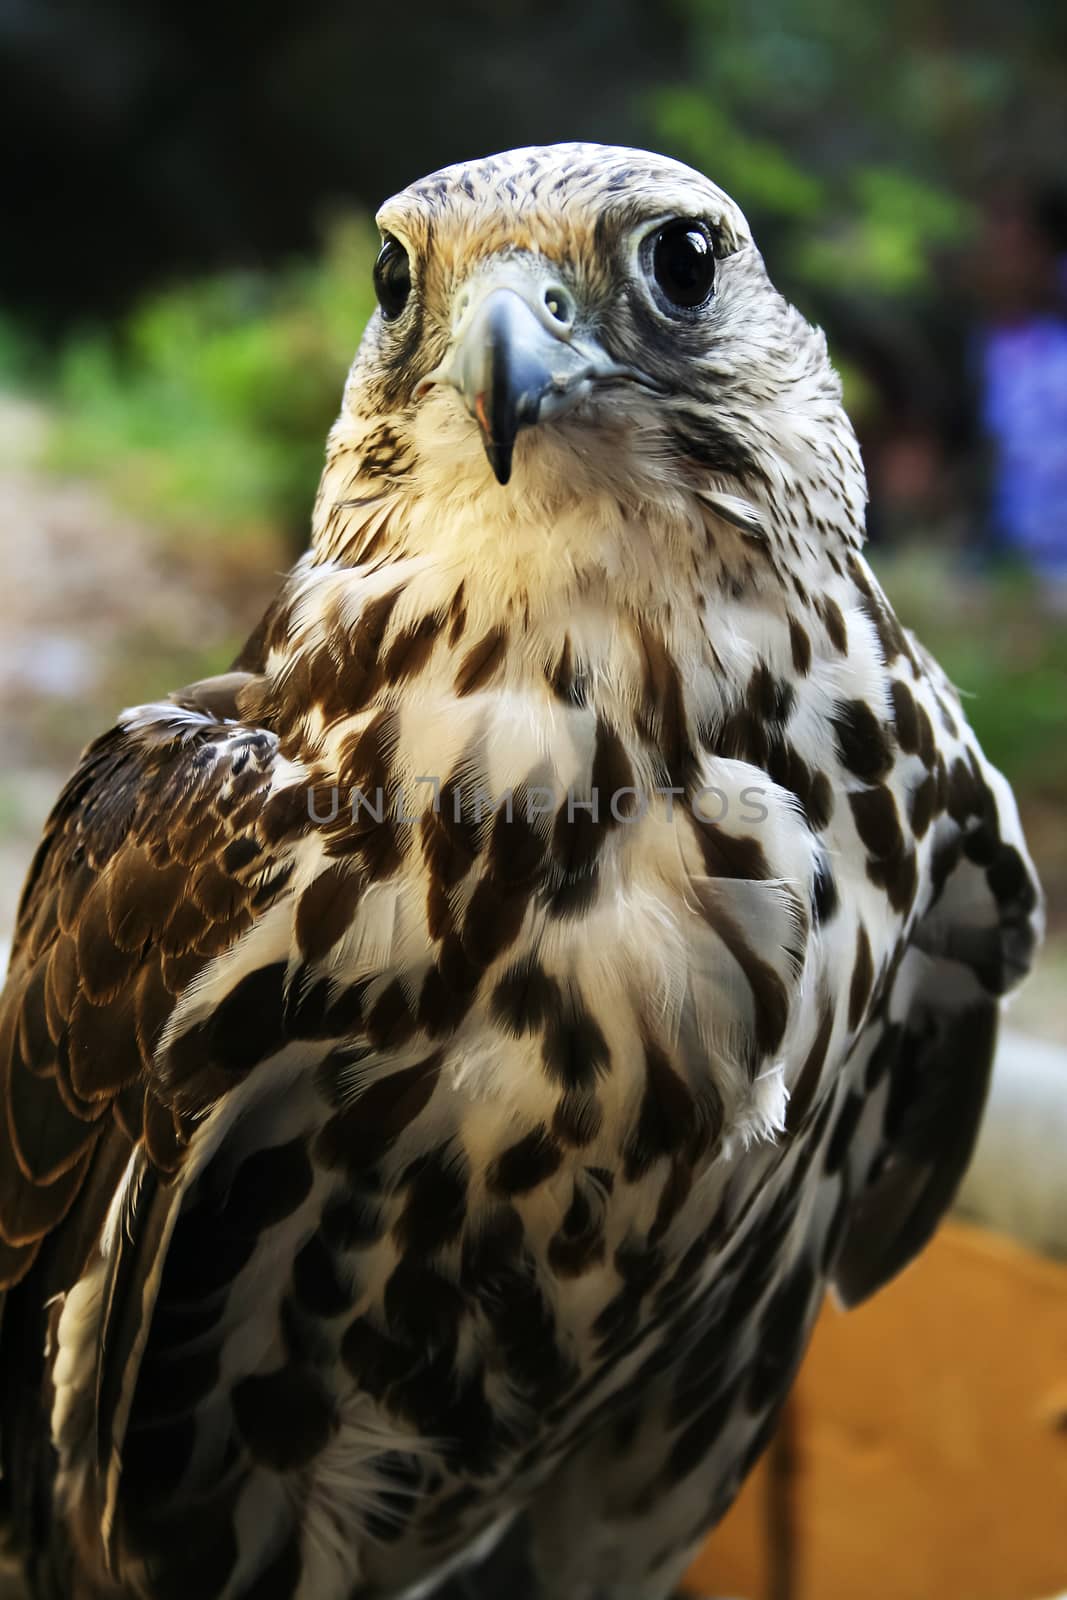 The Hawk by nicobernieri